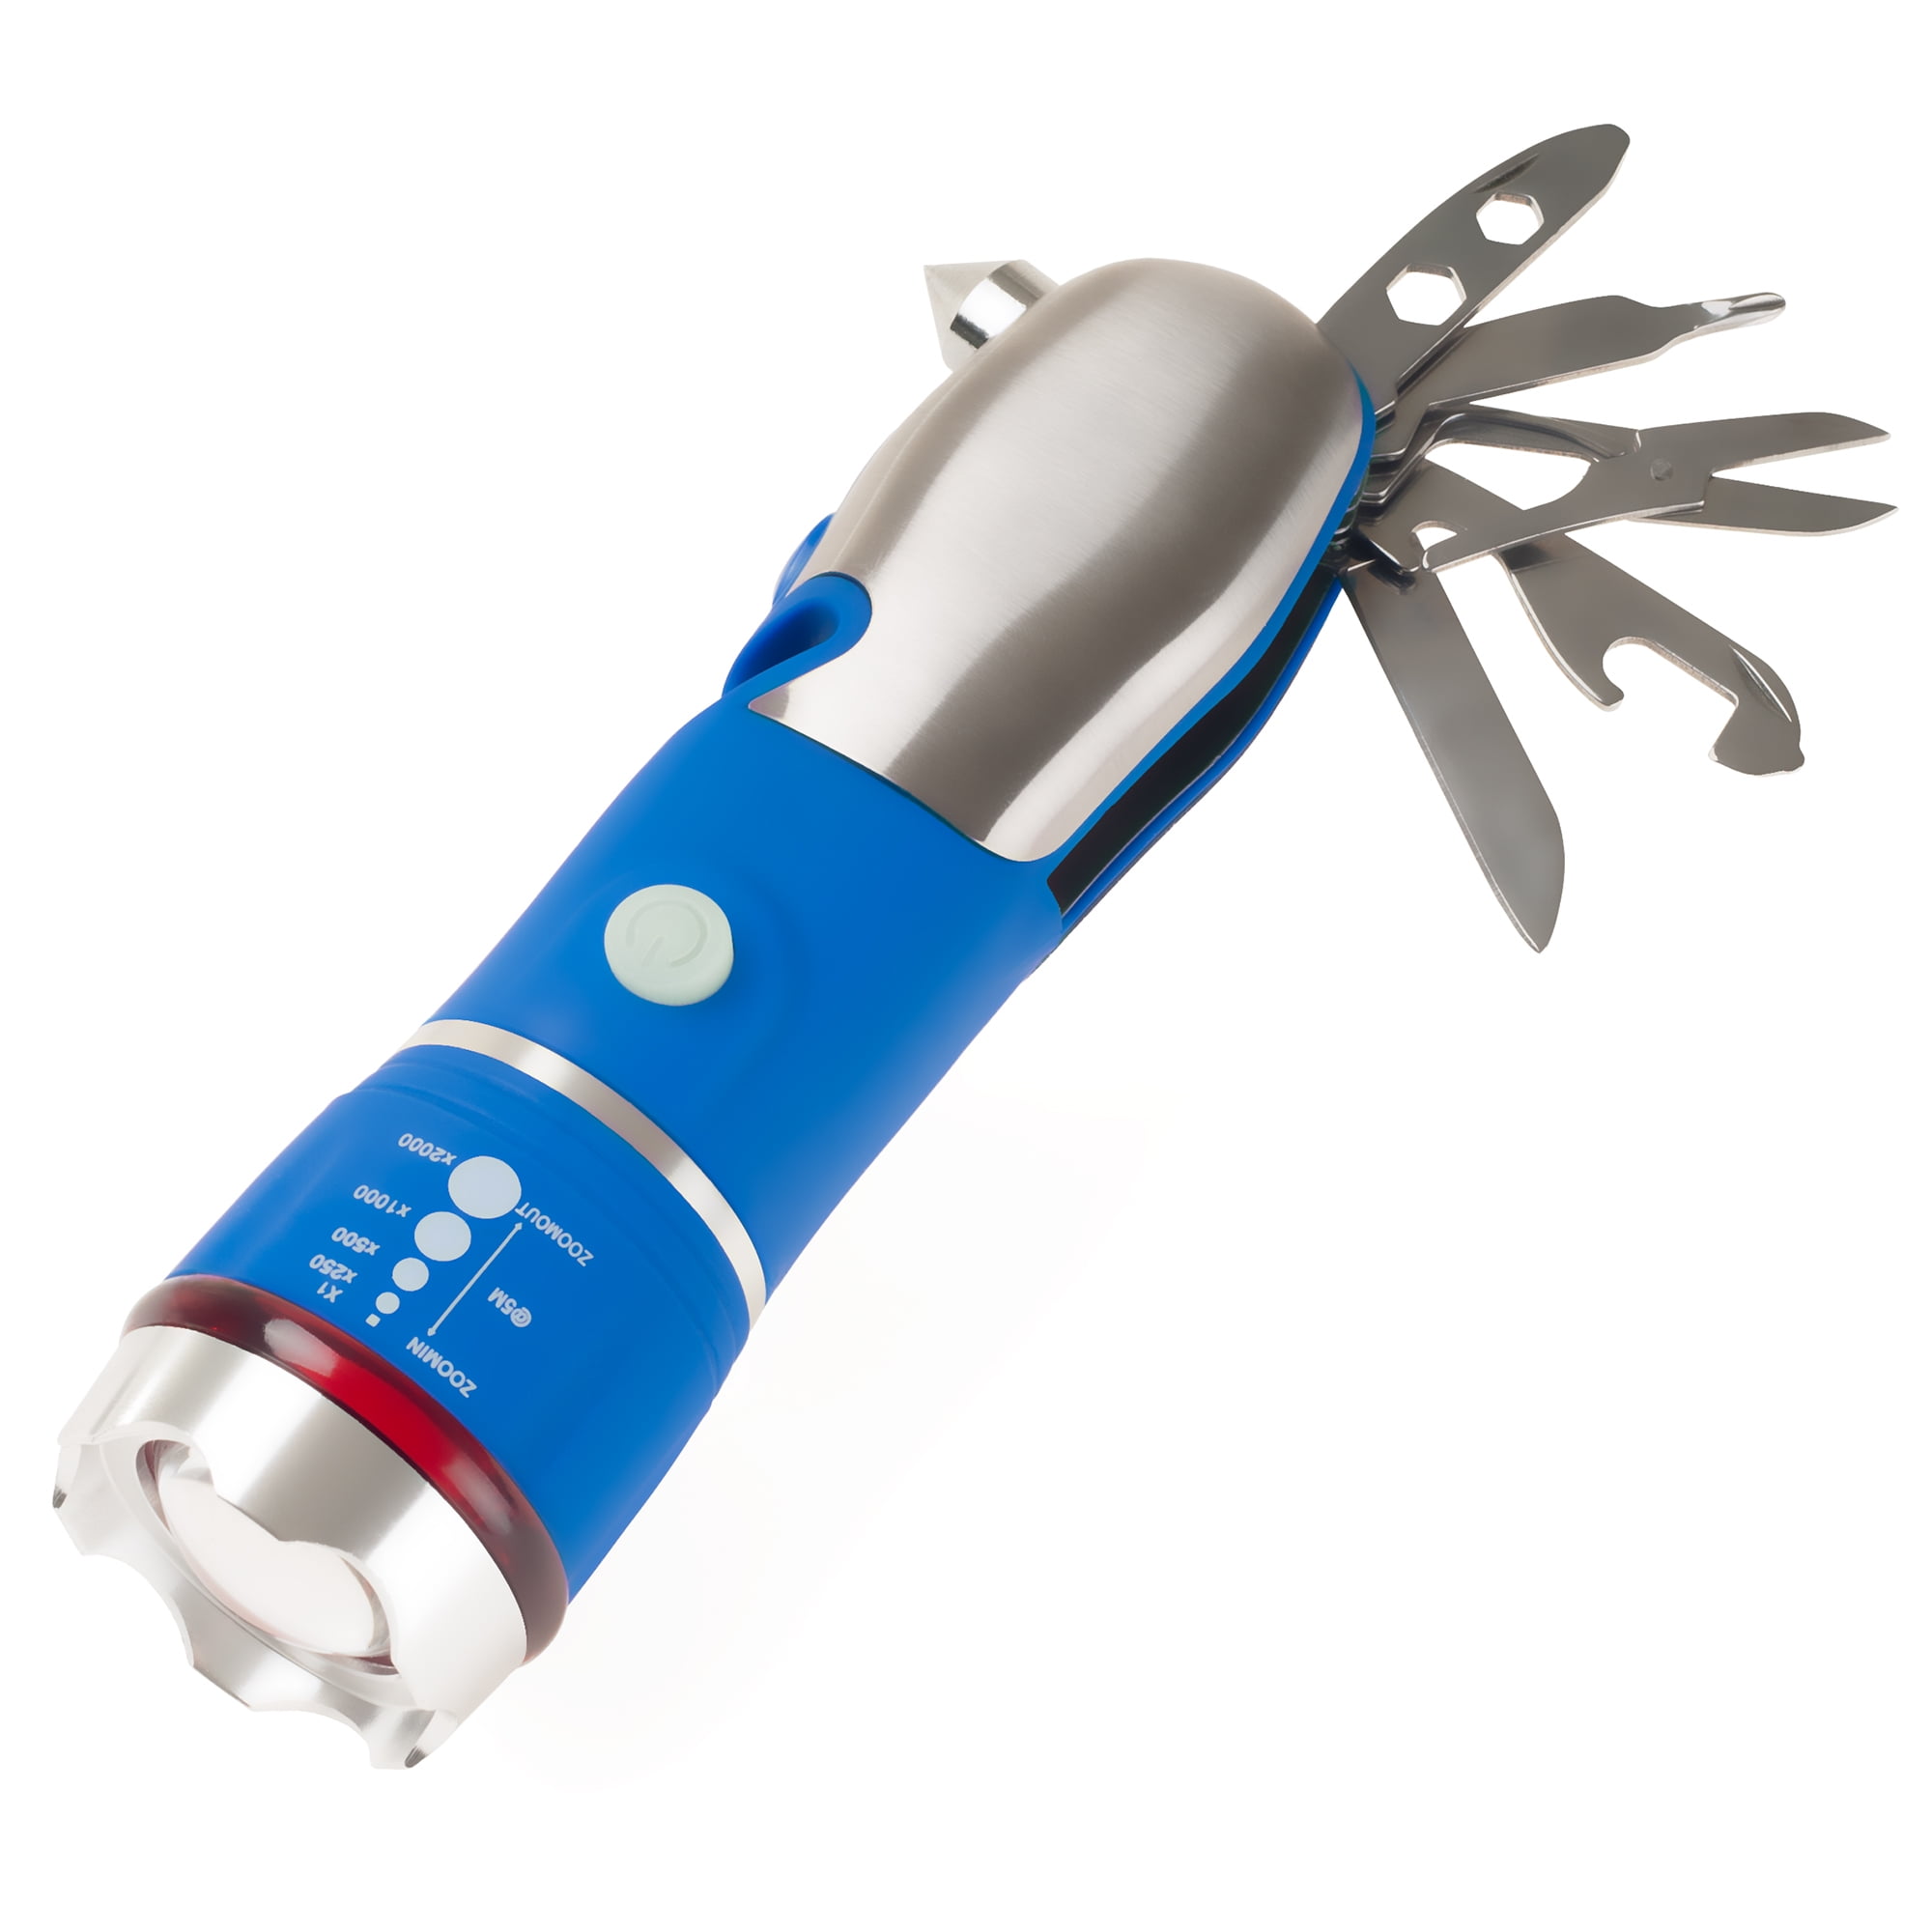 Carelite Multi-function LED Work Light Essential 5-in-1 Car Escape Tool Life Saving Survival Kit: Seatbelt Cutter Hammer Breaker Worklight Flashlight